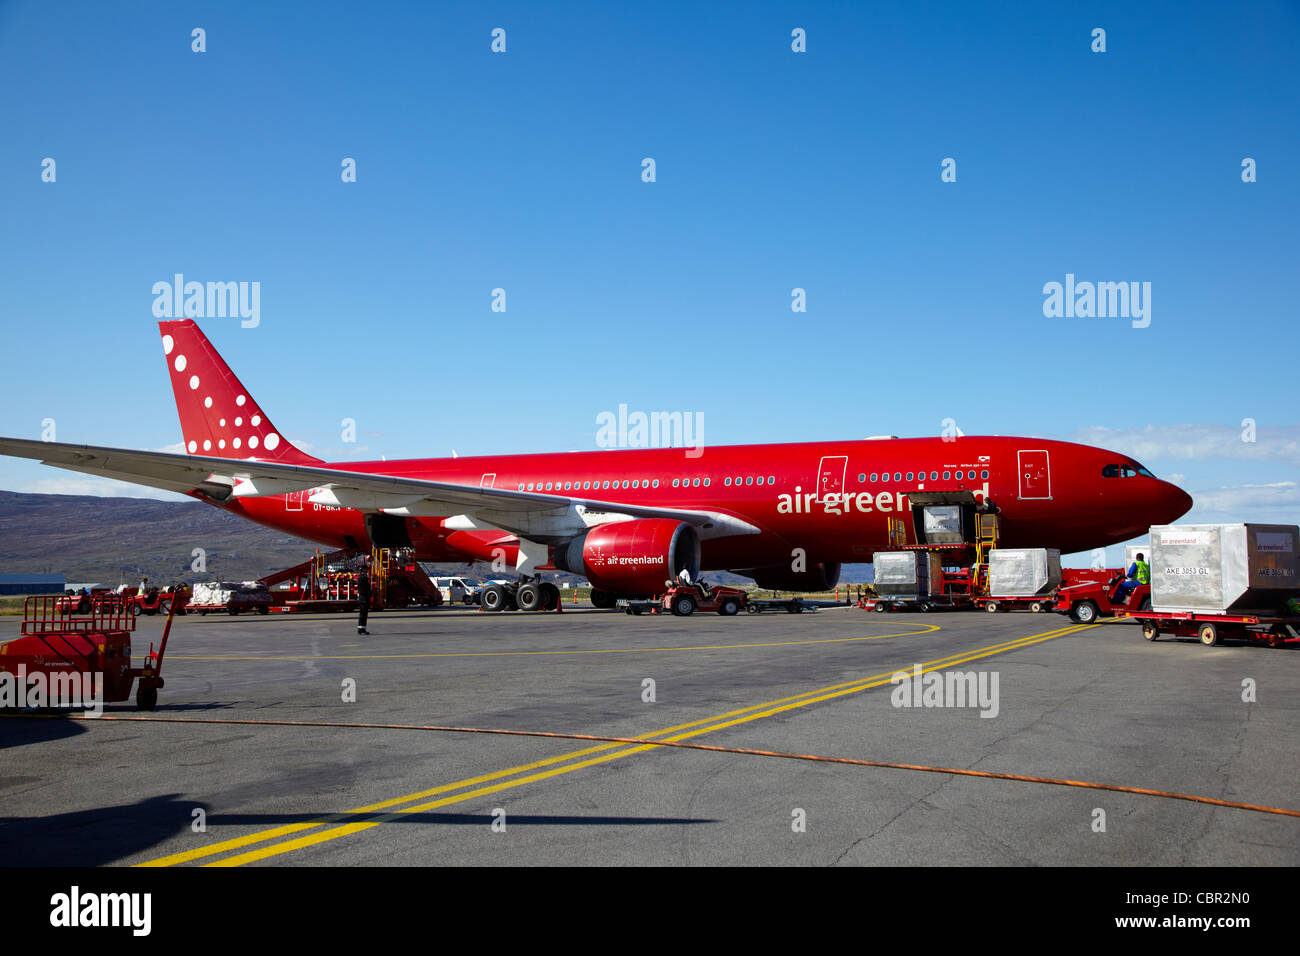 Air Greenland, Kangerlussuaq Airport, Groenlandia Foto Stock